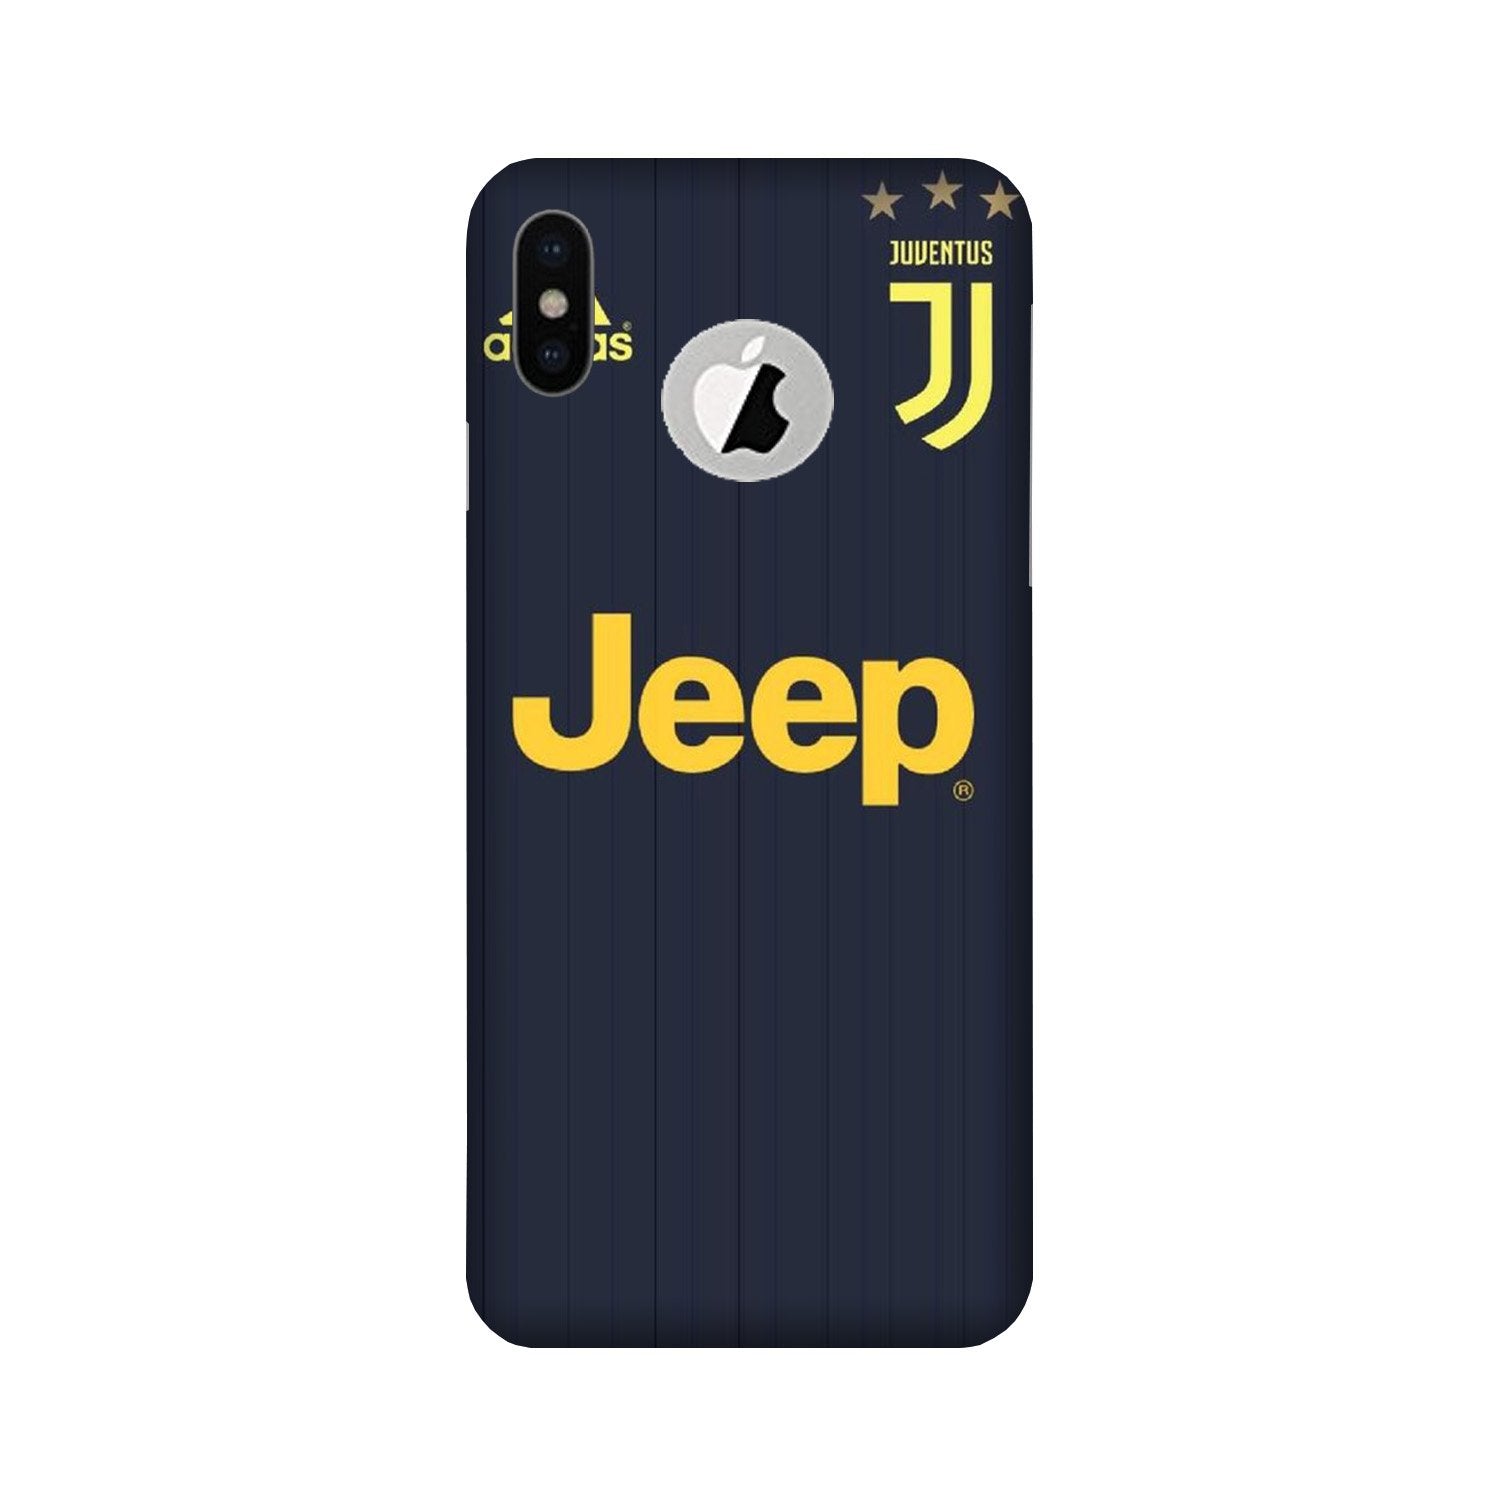 Jeep Juventus Case for iPhone X logo cut(Design - 161)